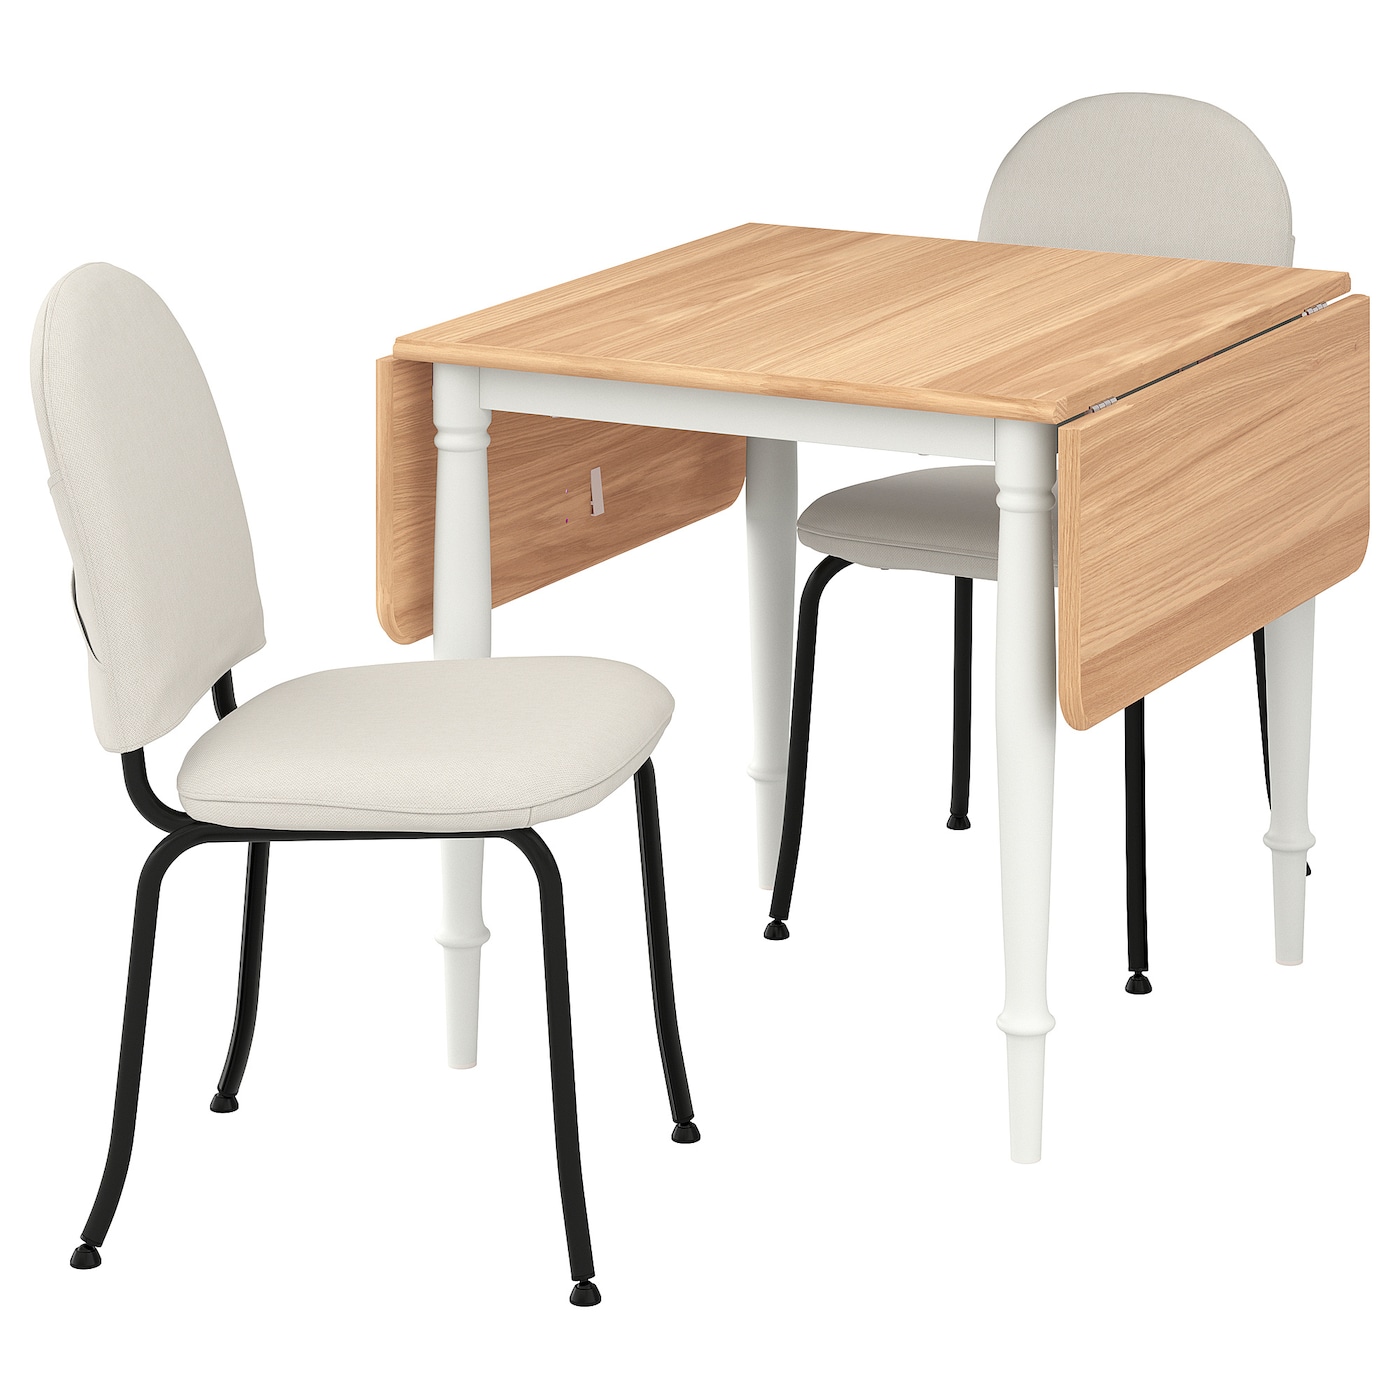 Стол и 2 стула - DANDERYD / EBBALYCKE IKEA/ ДАНДЭРЮД / ЭББАЛЮККЕ ИКЕА,   74/134x80 см, белый/ под беленый дуб